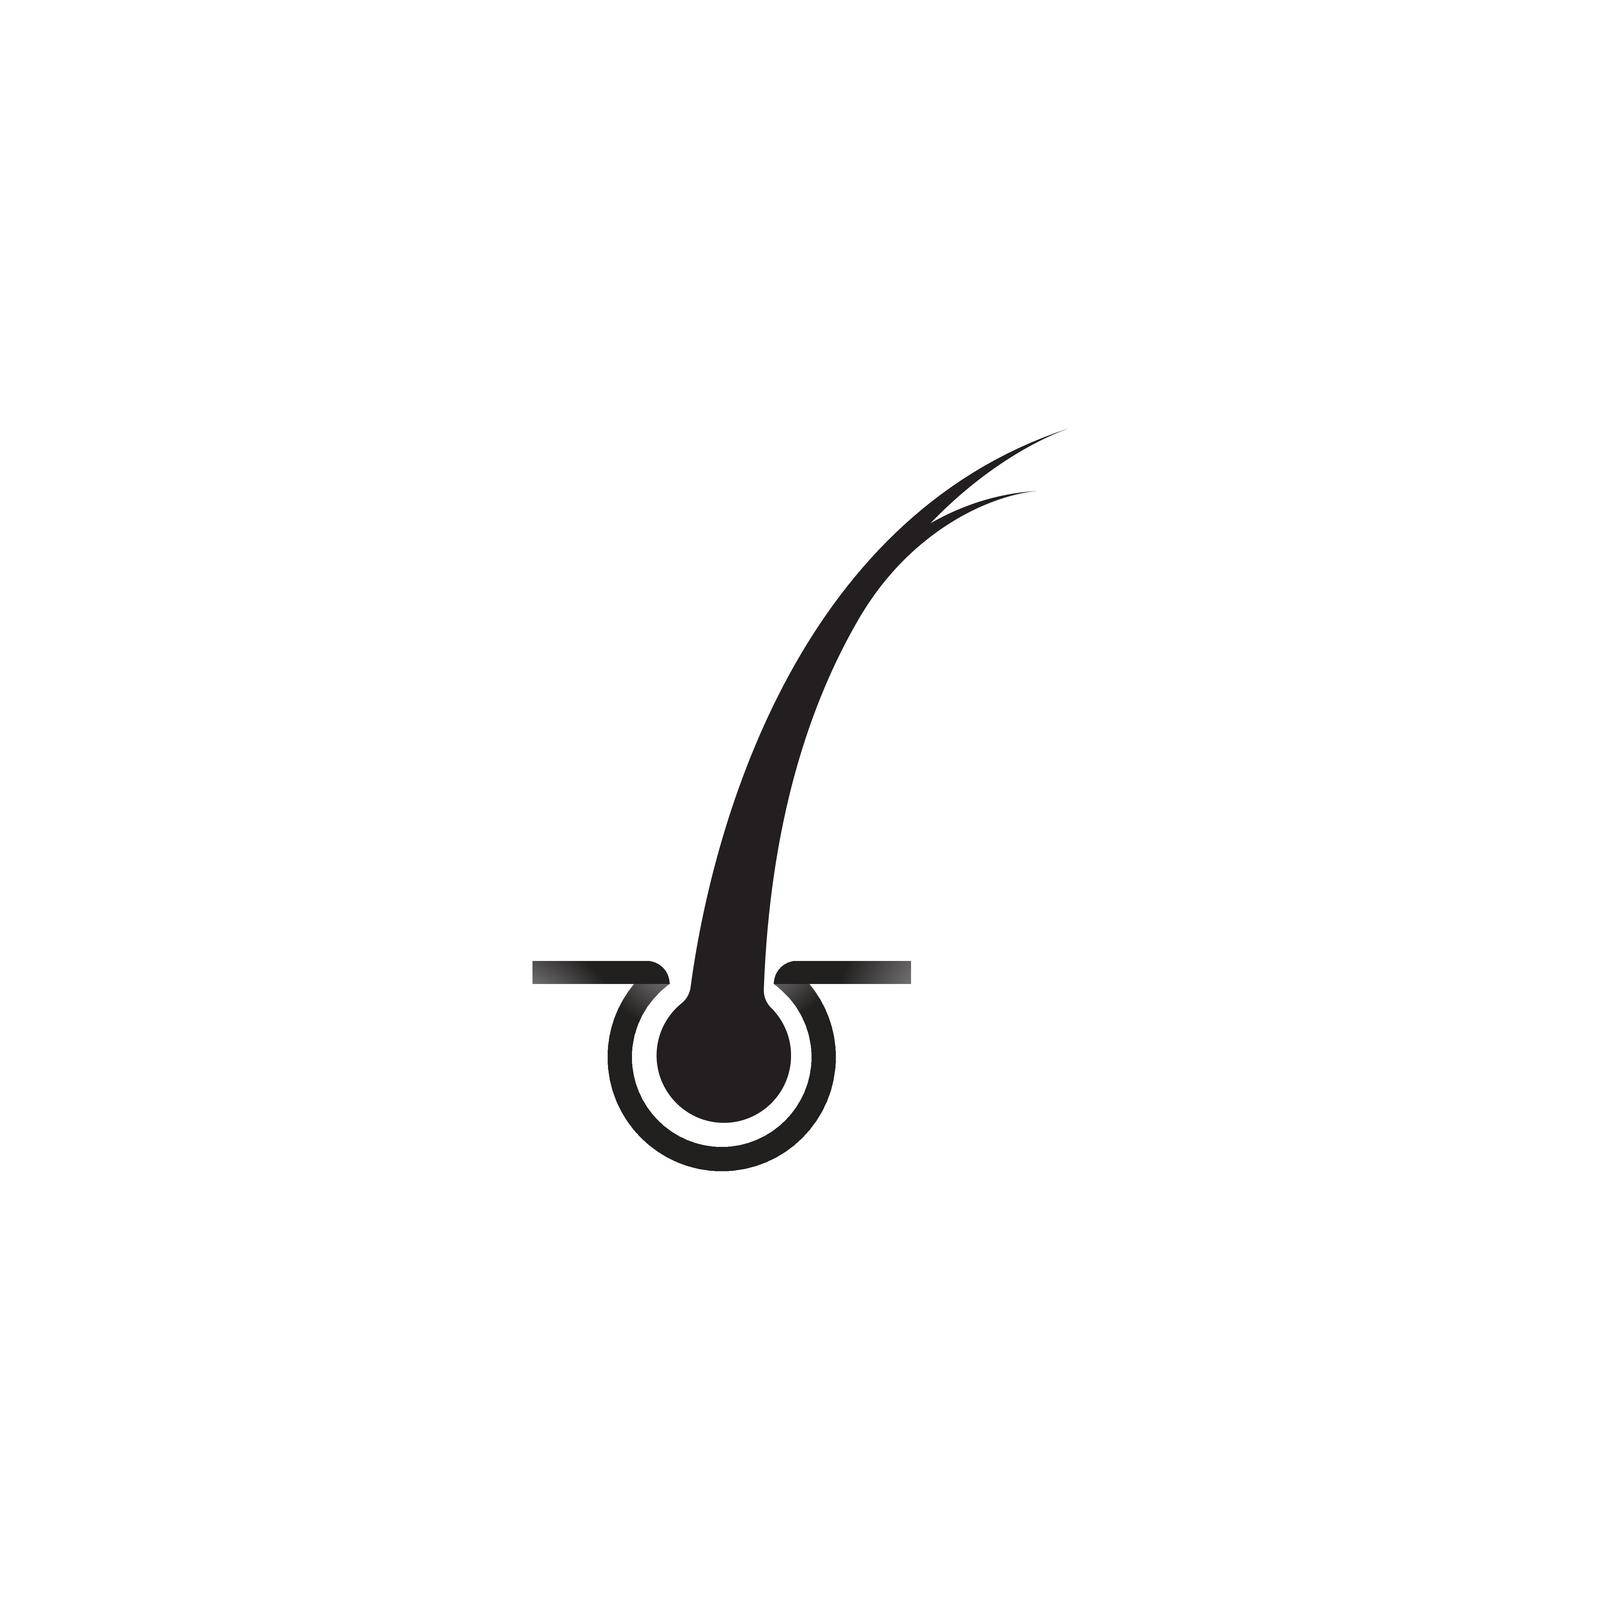 hair follicle symbol icon vector illustration design